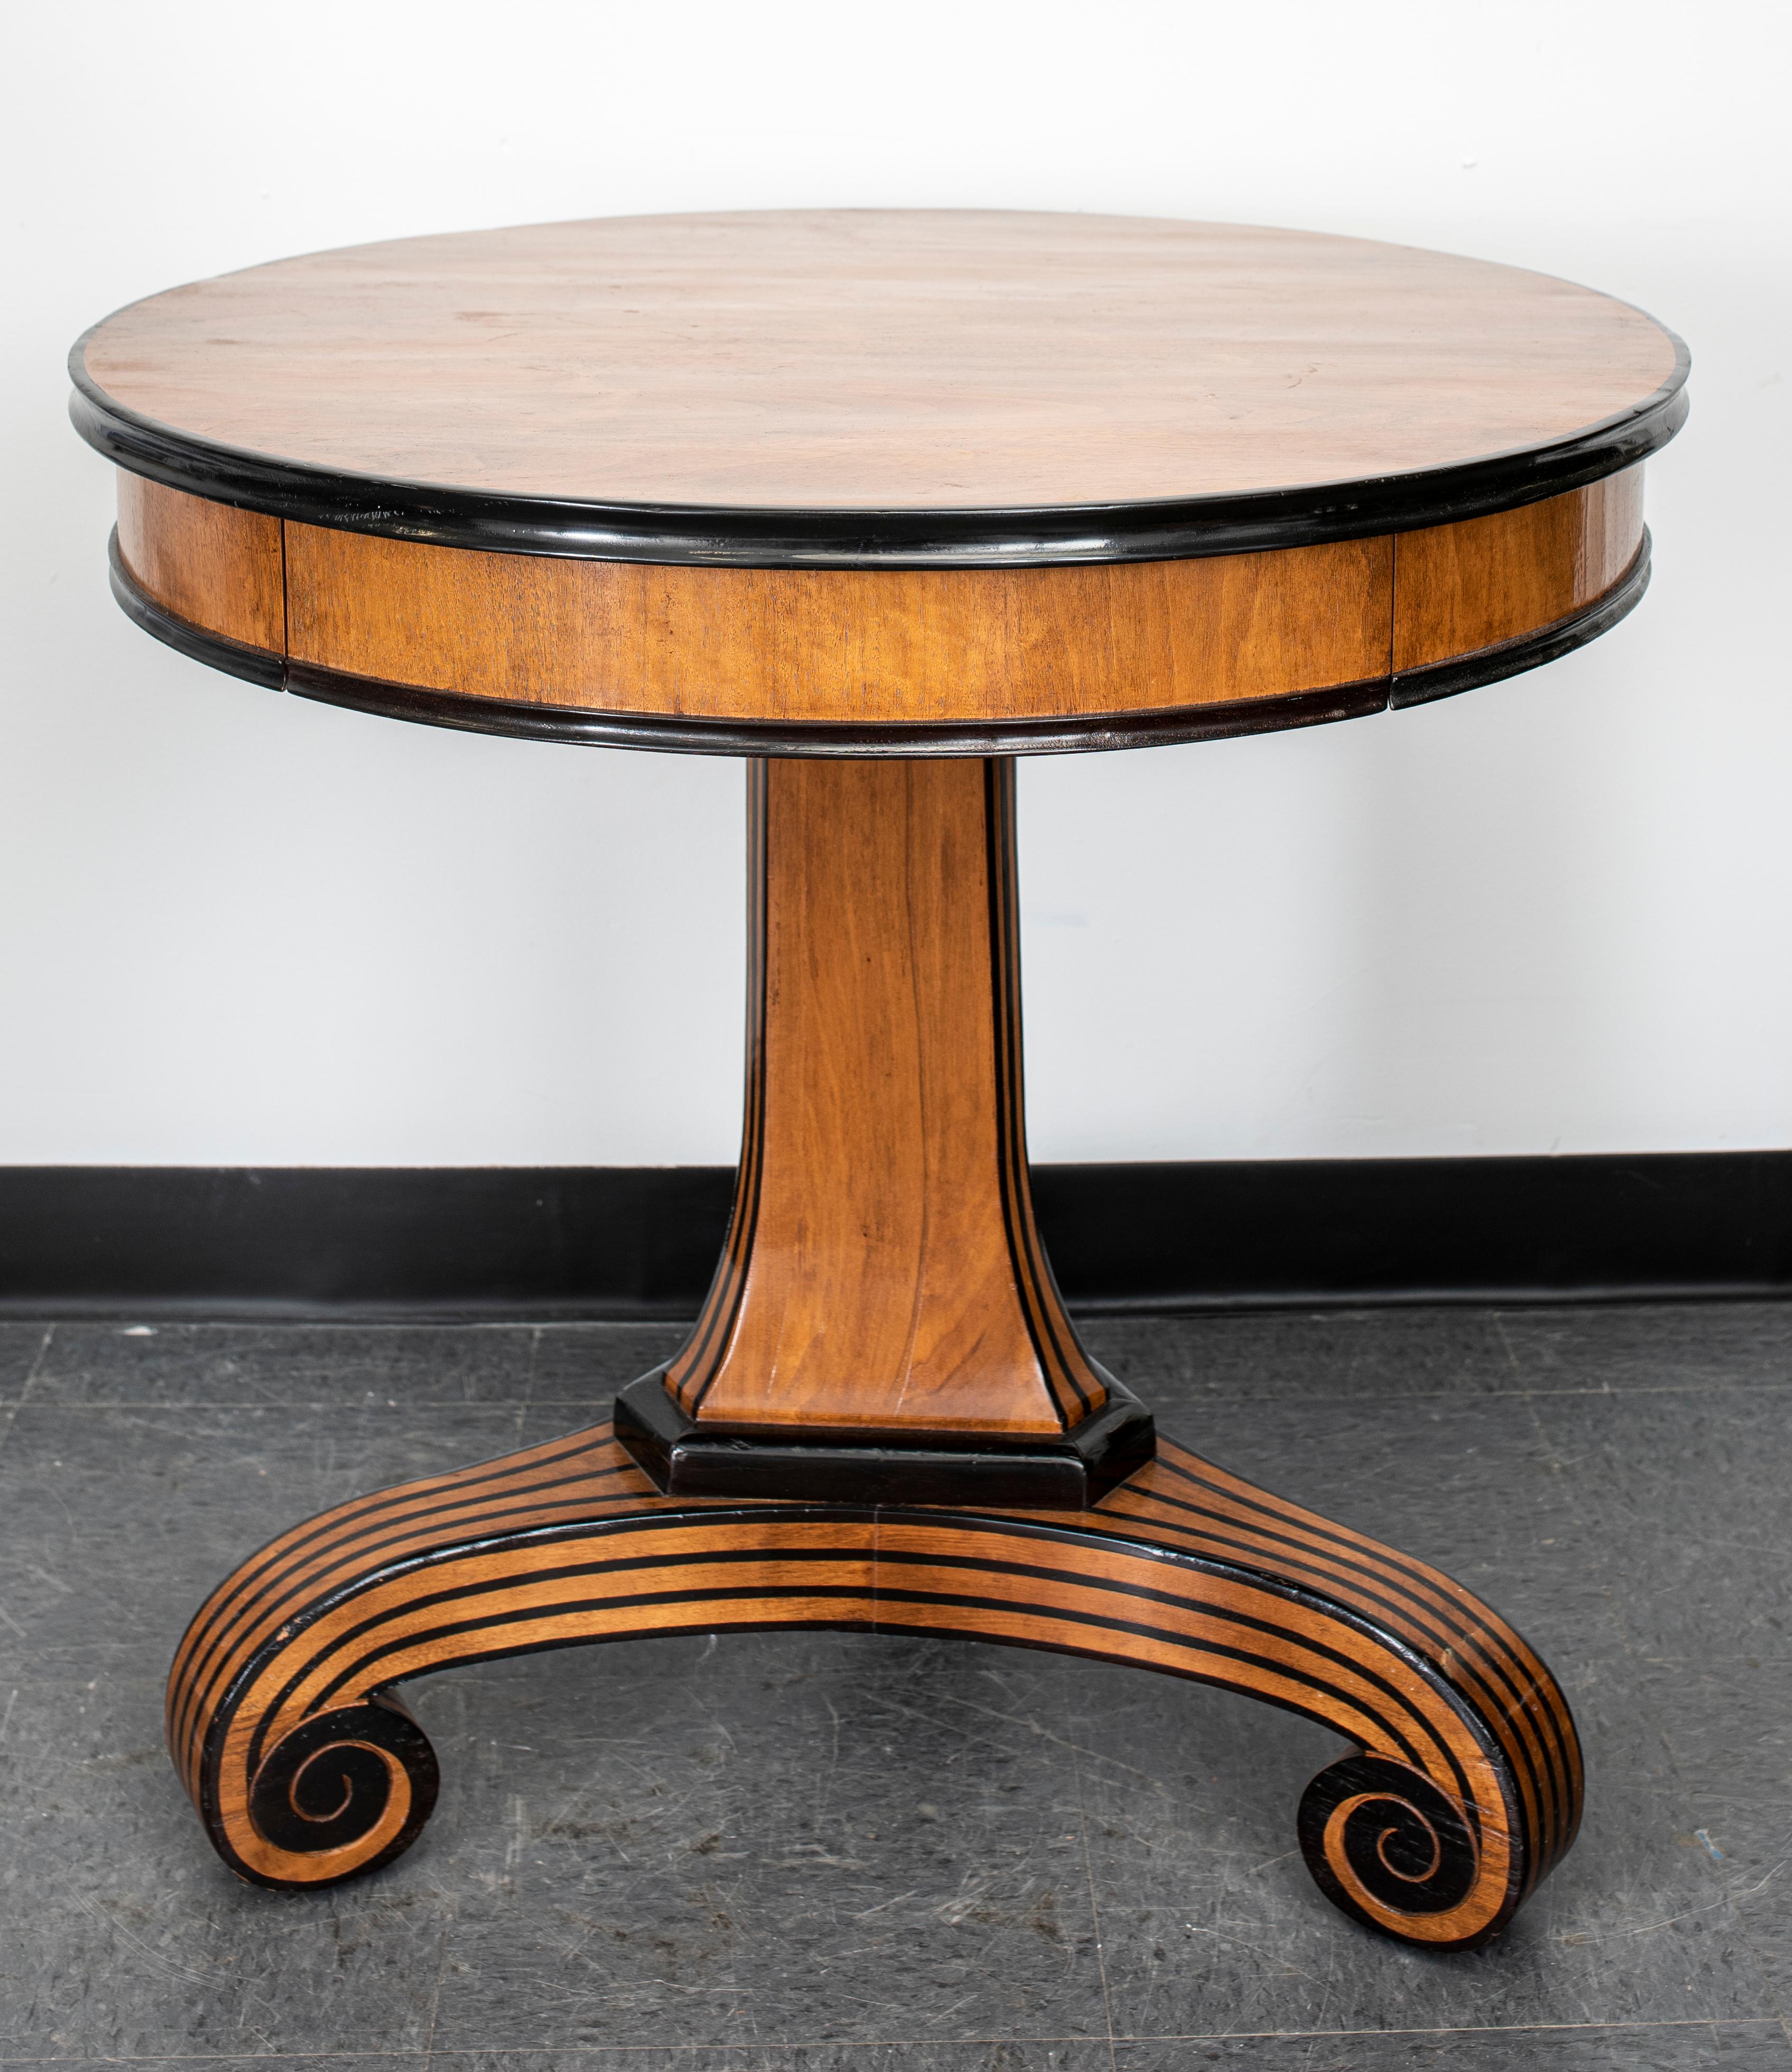 Rose Tarlow walnut center table, in the Biedermeier taste with parcel ebonized details, with 